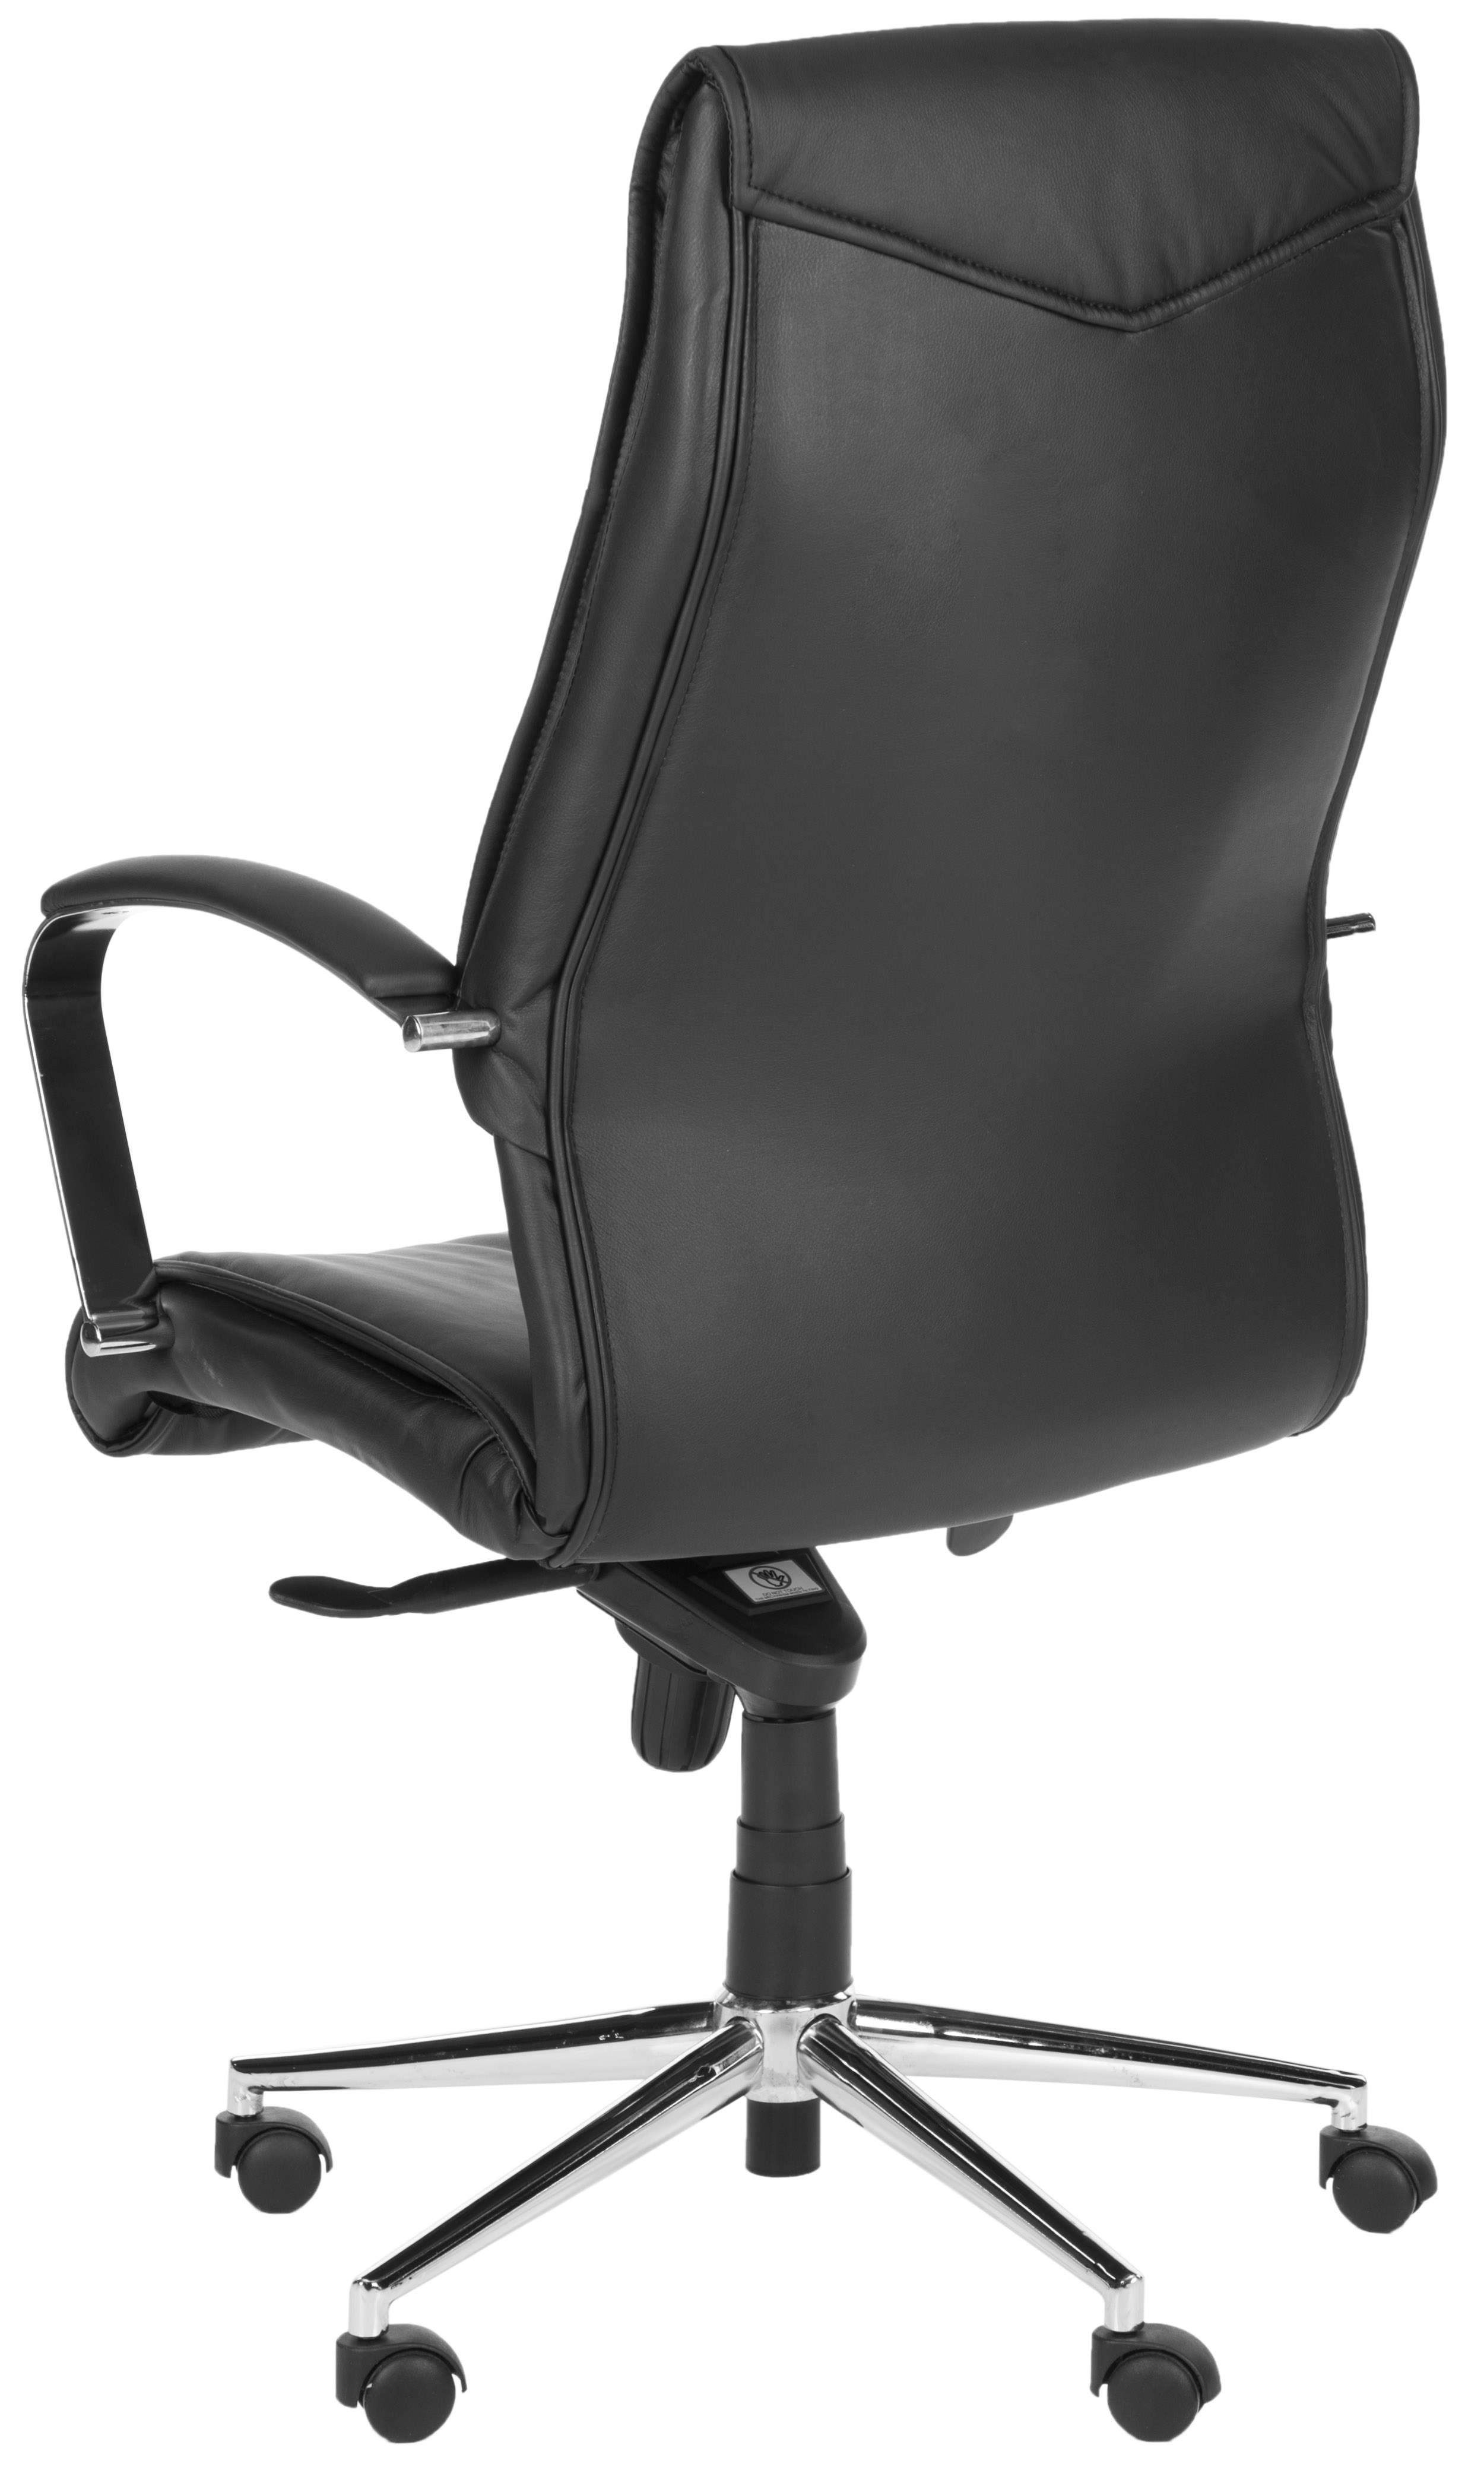 Fernando Desk Chair - Black/Silver - Safavieh - Image 1